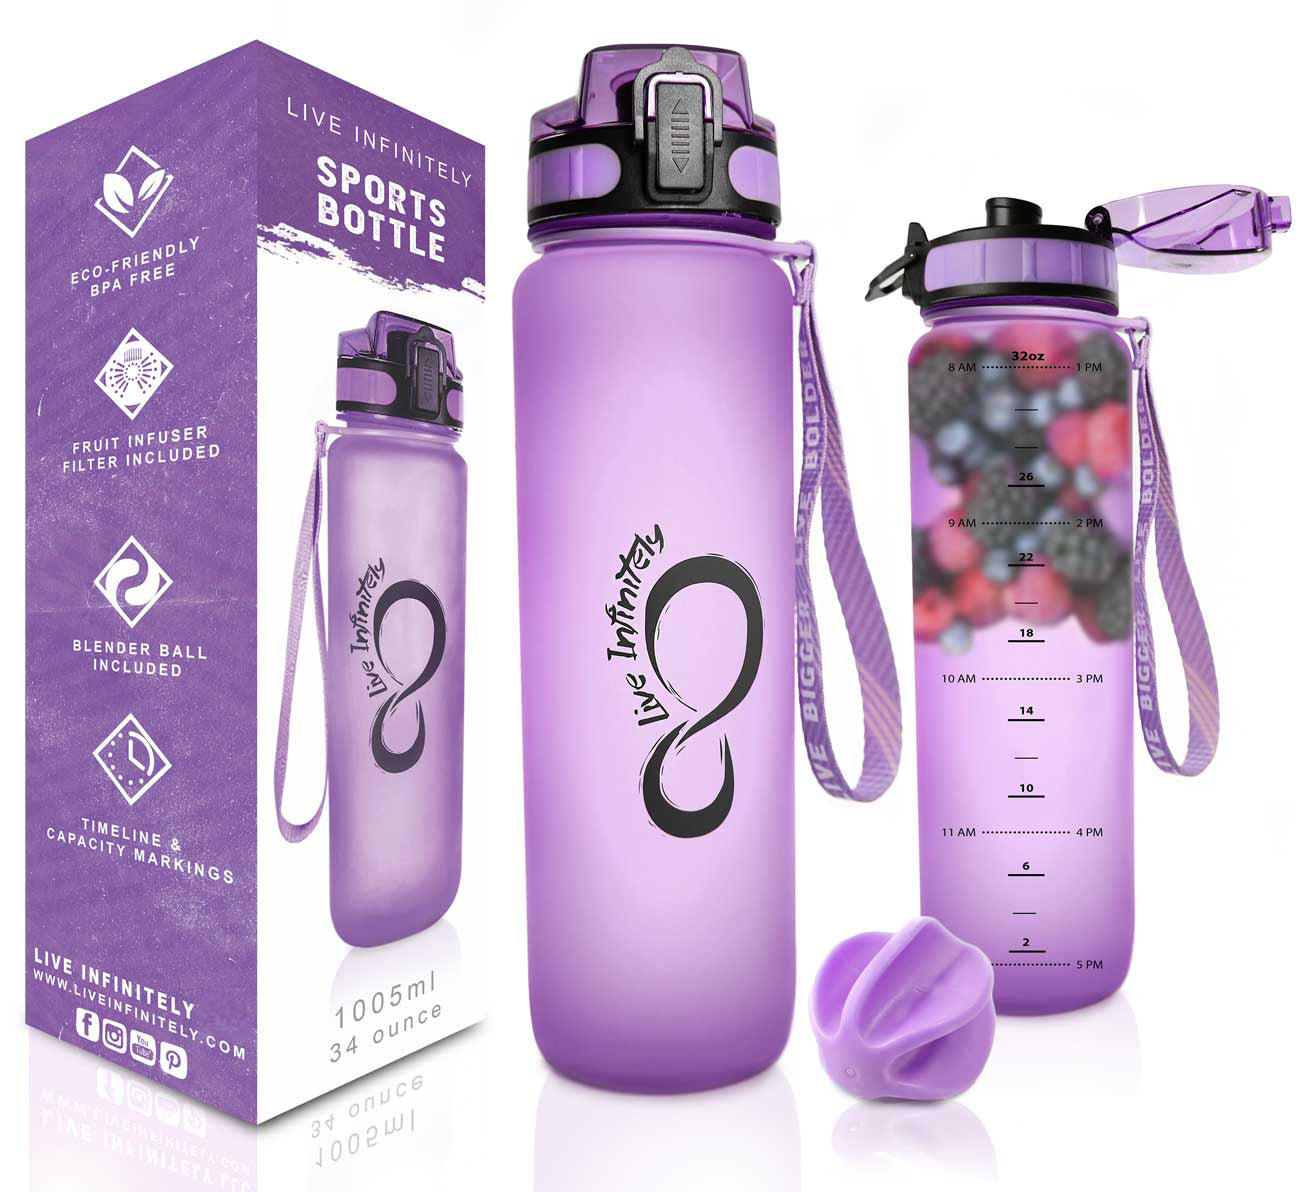 32 oz Straw Water Bottle with Times Purple Mint